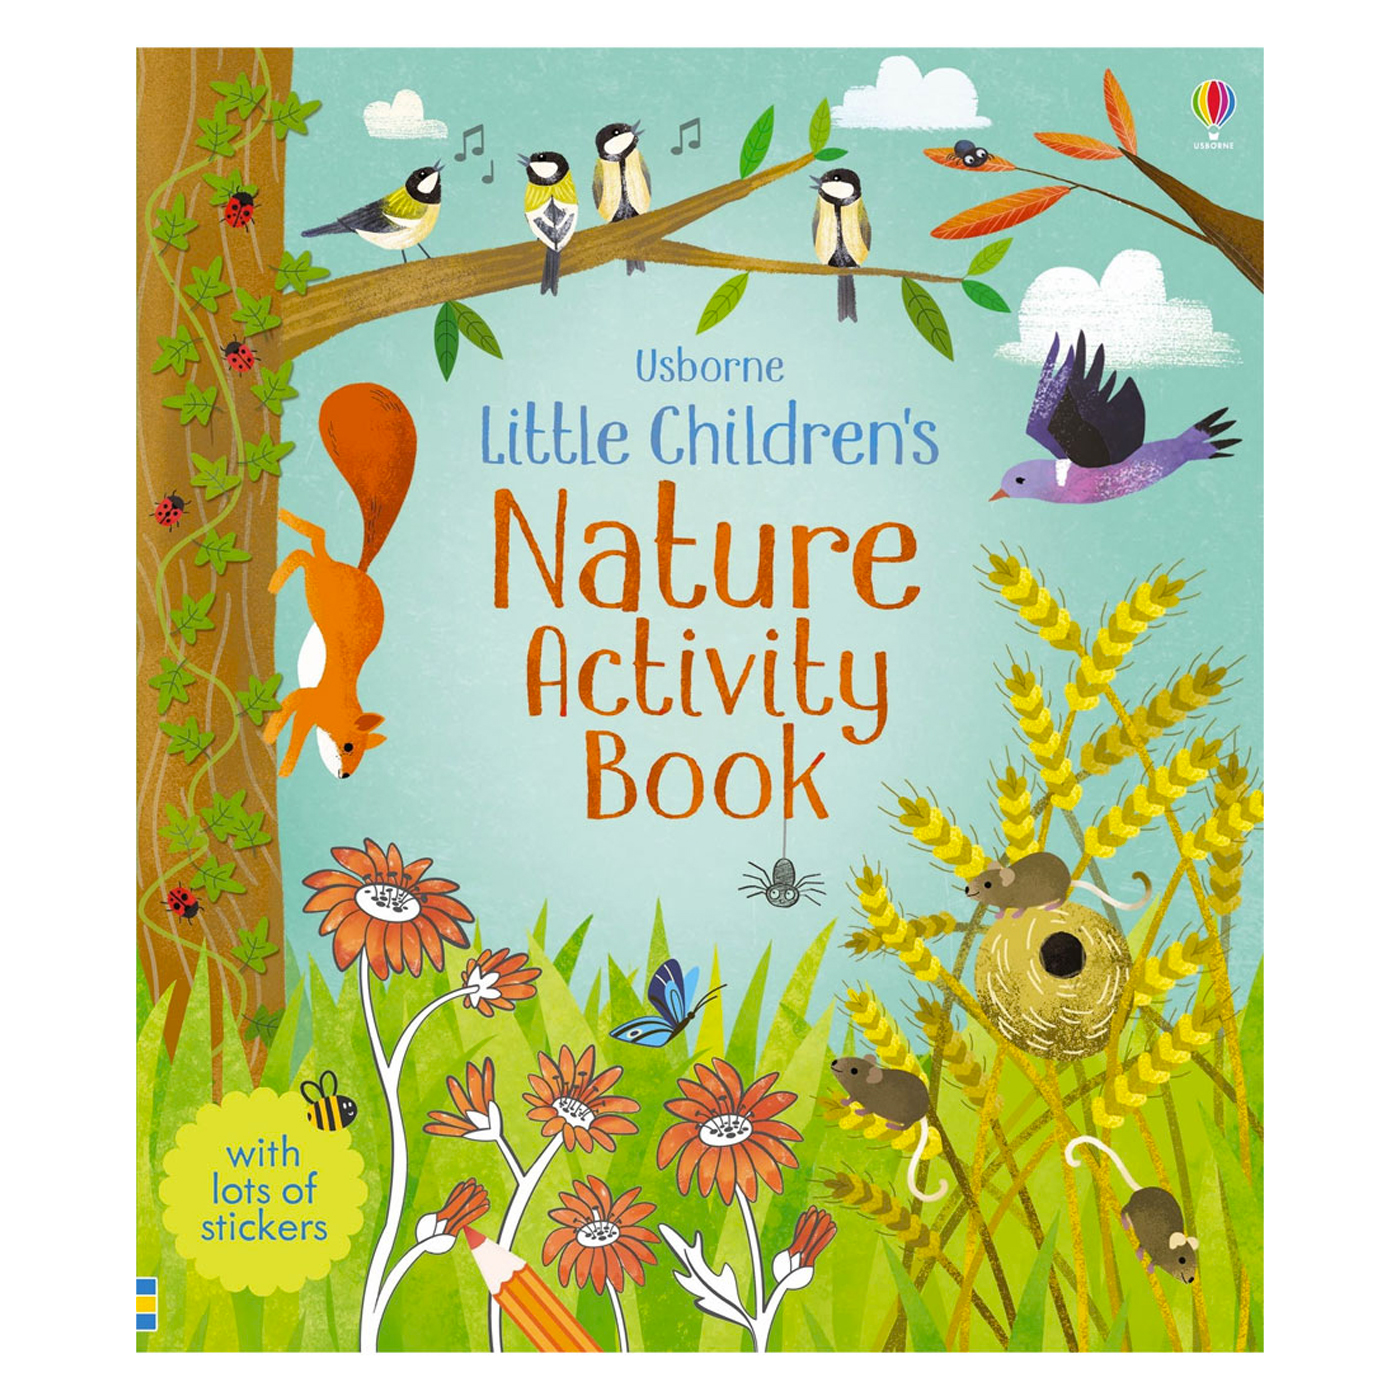  Little Children's Nature Activity Book